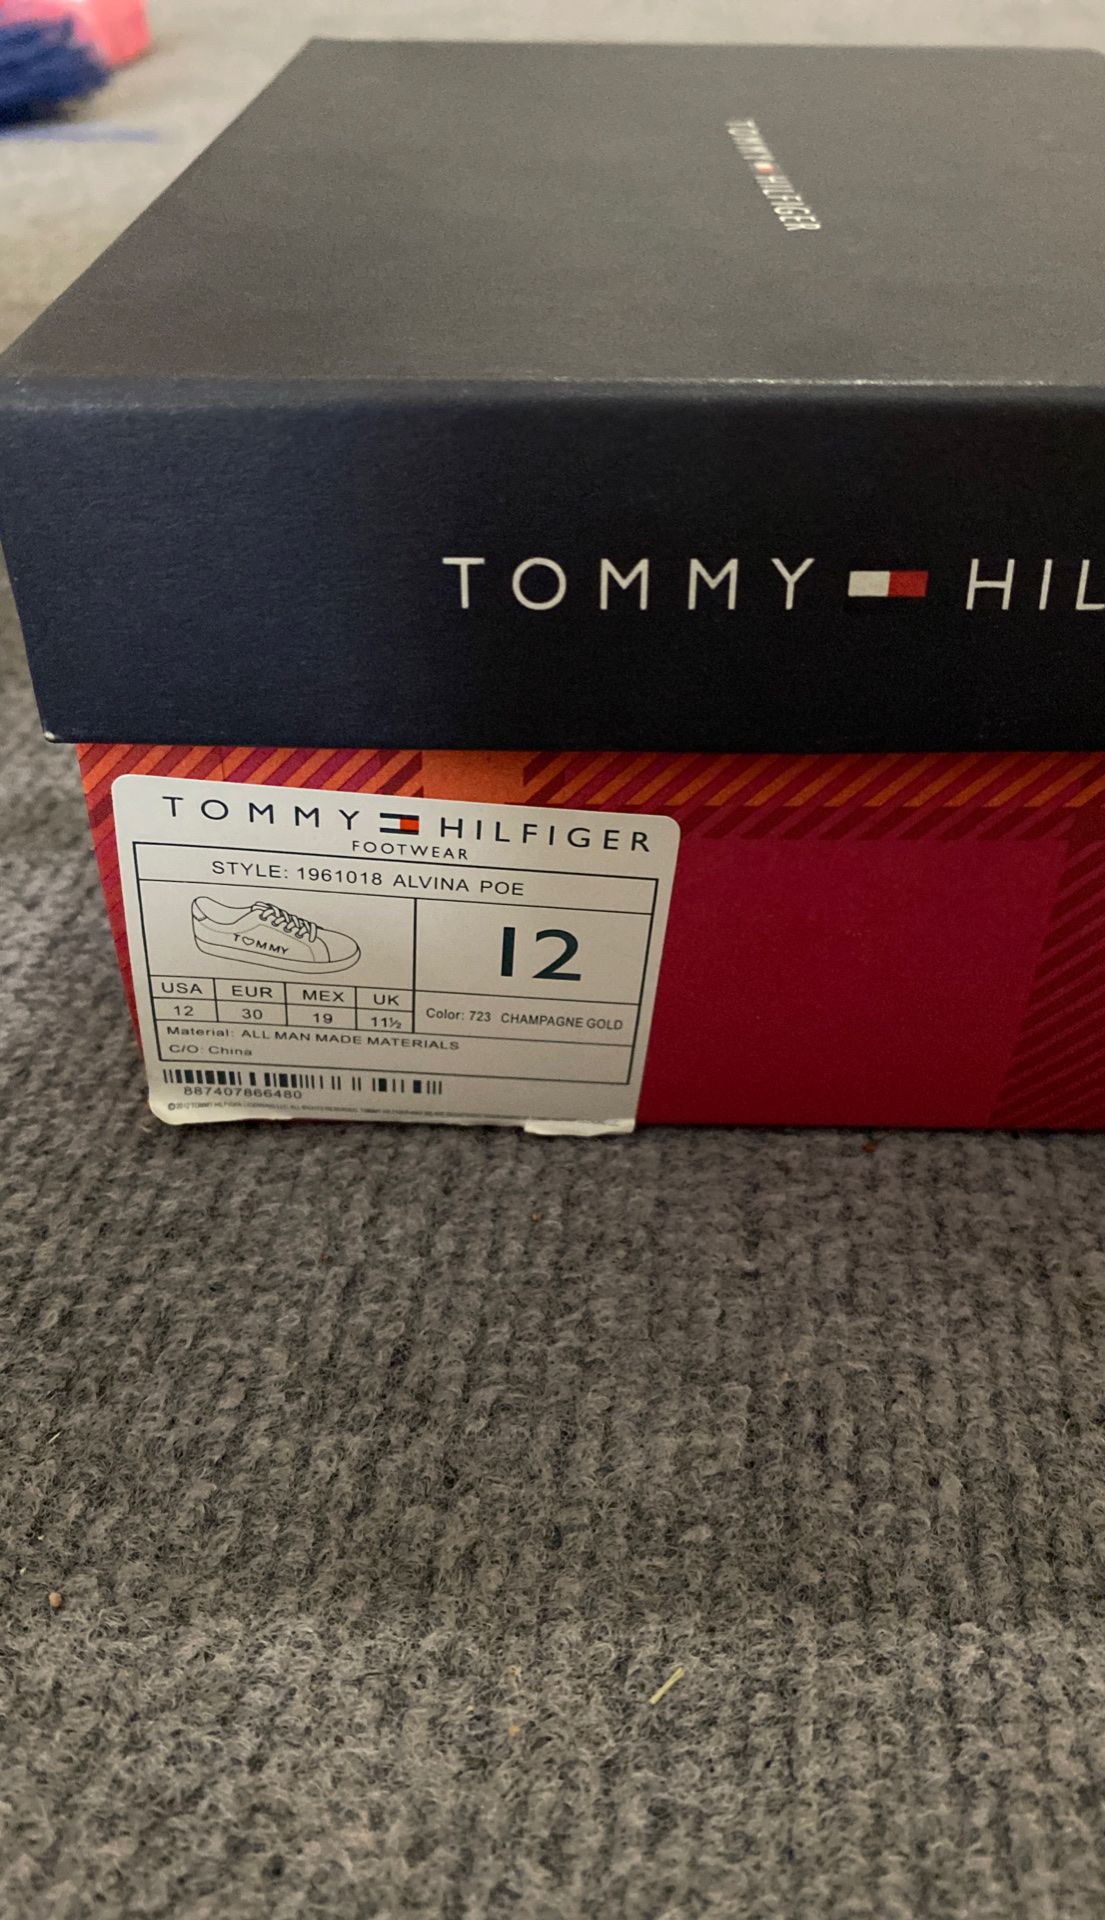 Tommy Hilfiger shoes